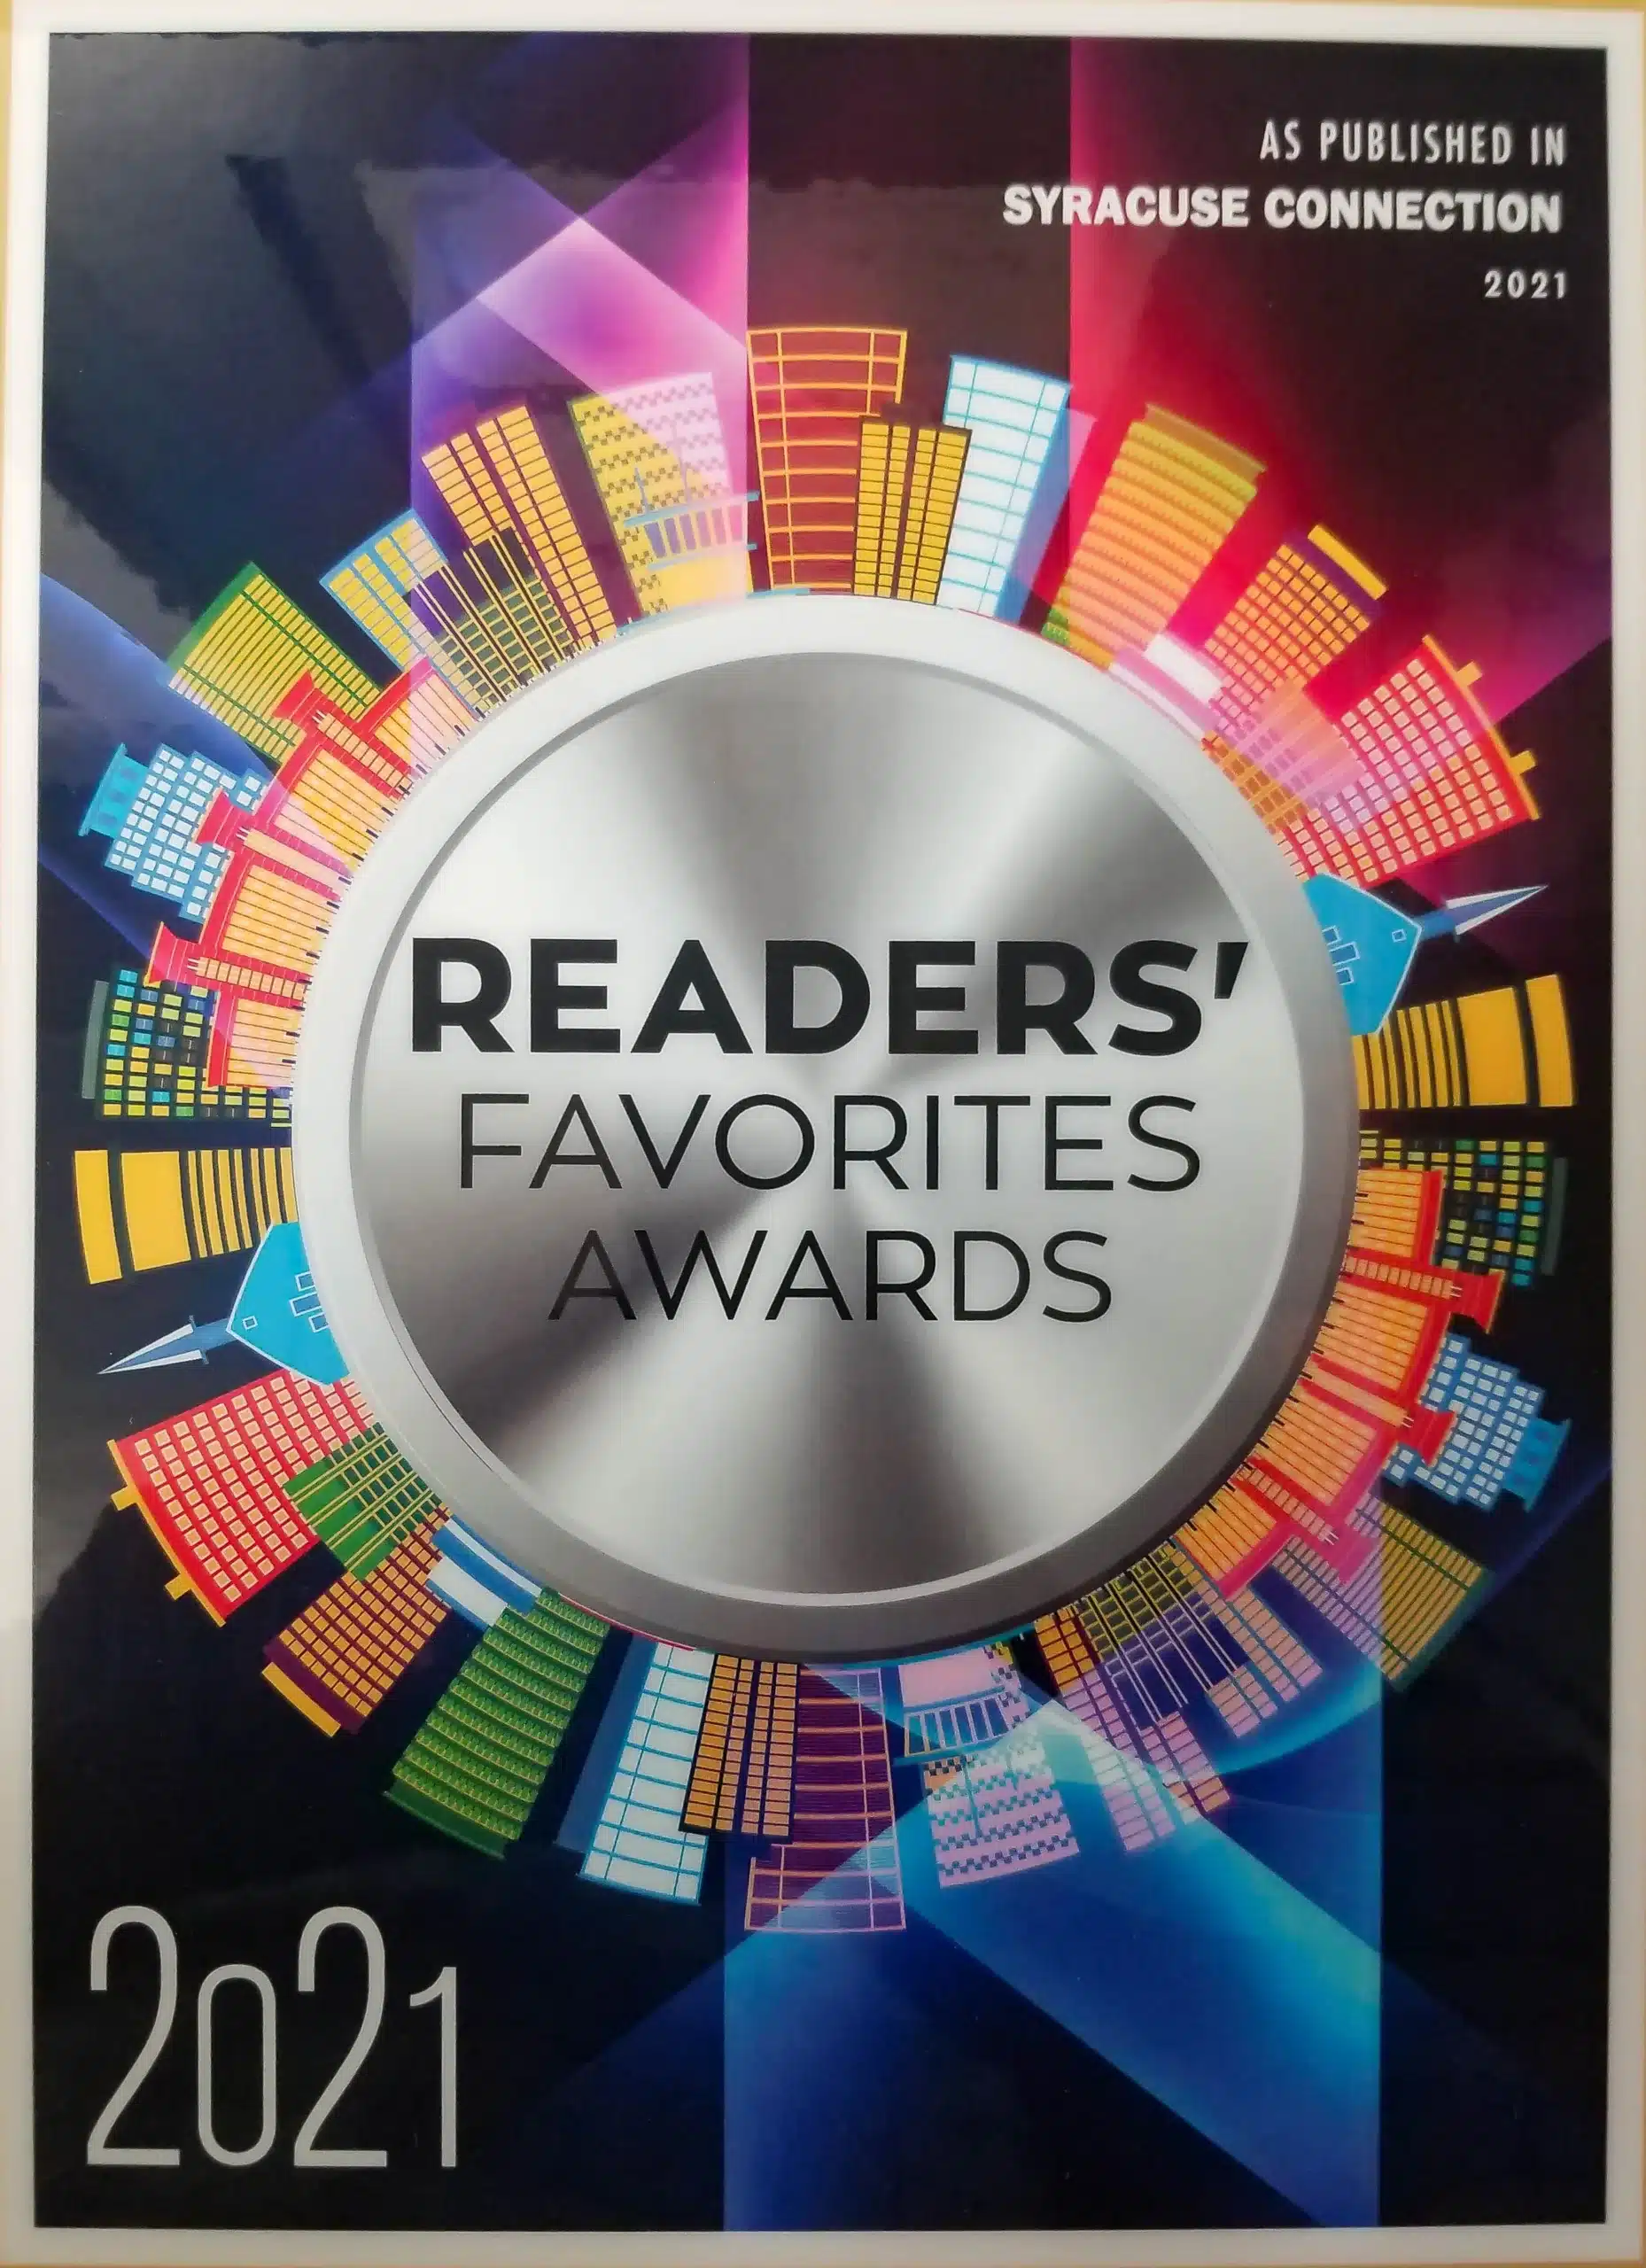 Readers' Favorites awards 2021